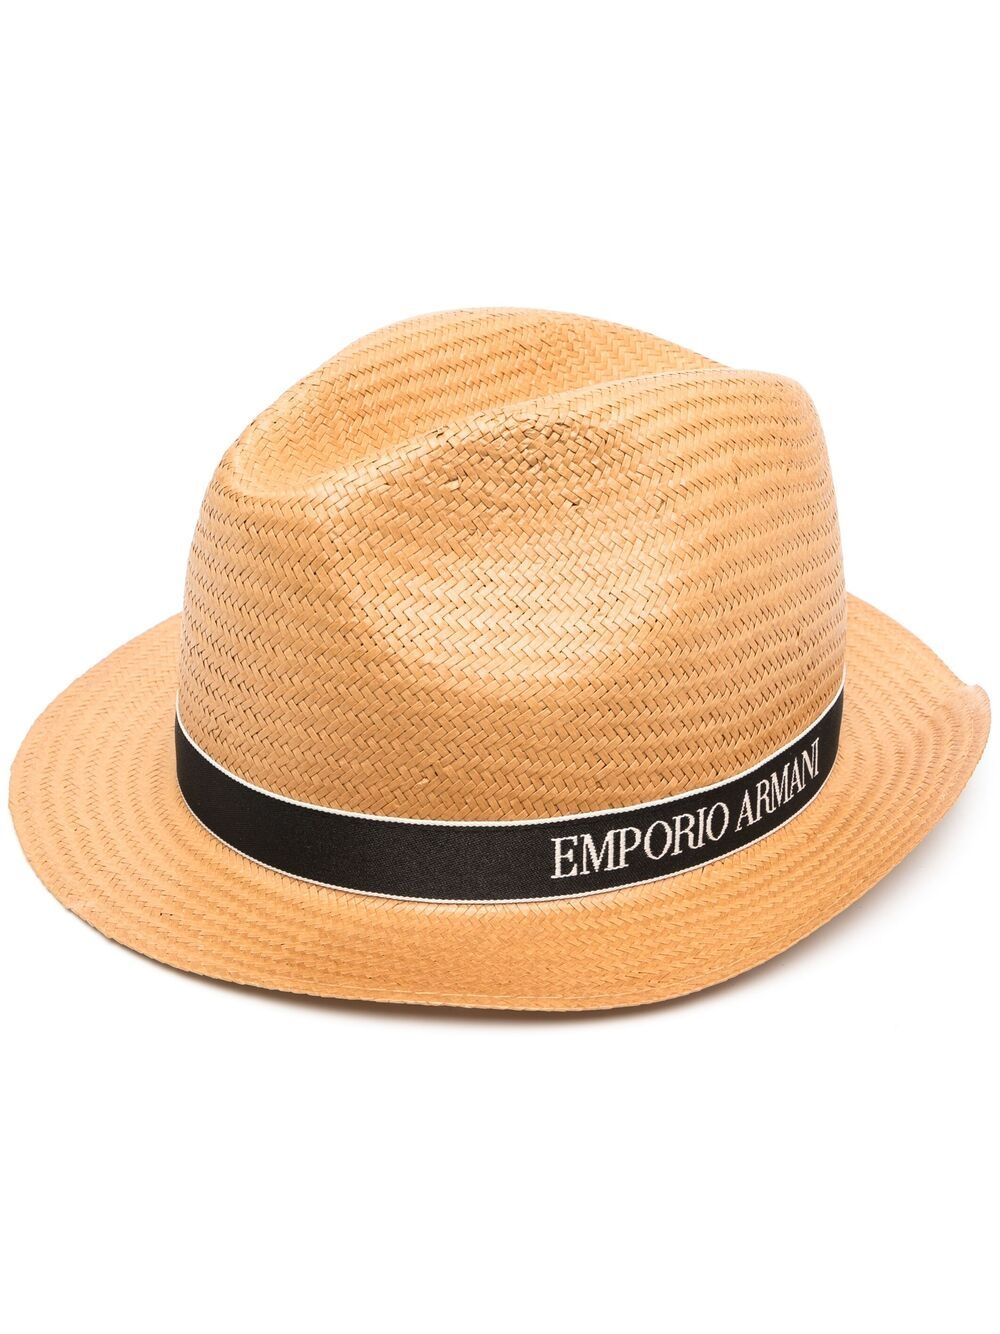 Emporio Armani Stripe Detailing Logo Fedora Hat In Neutrals